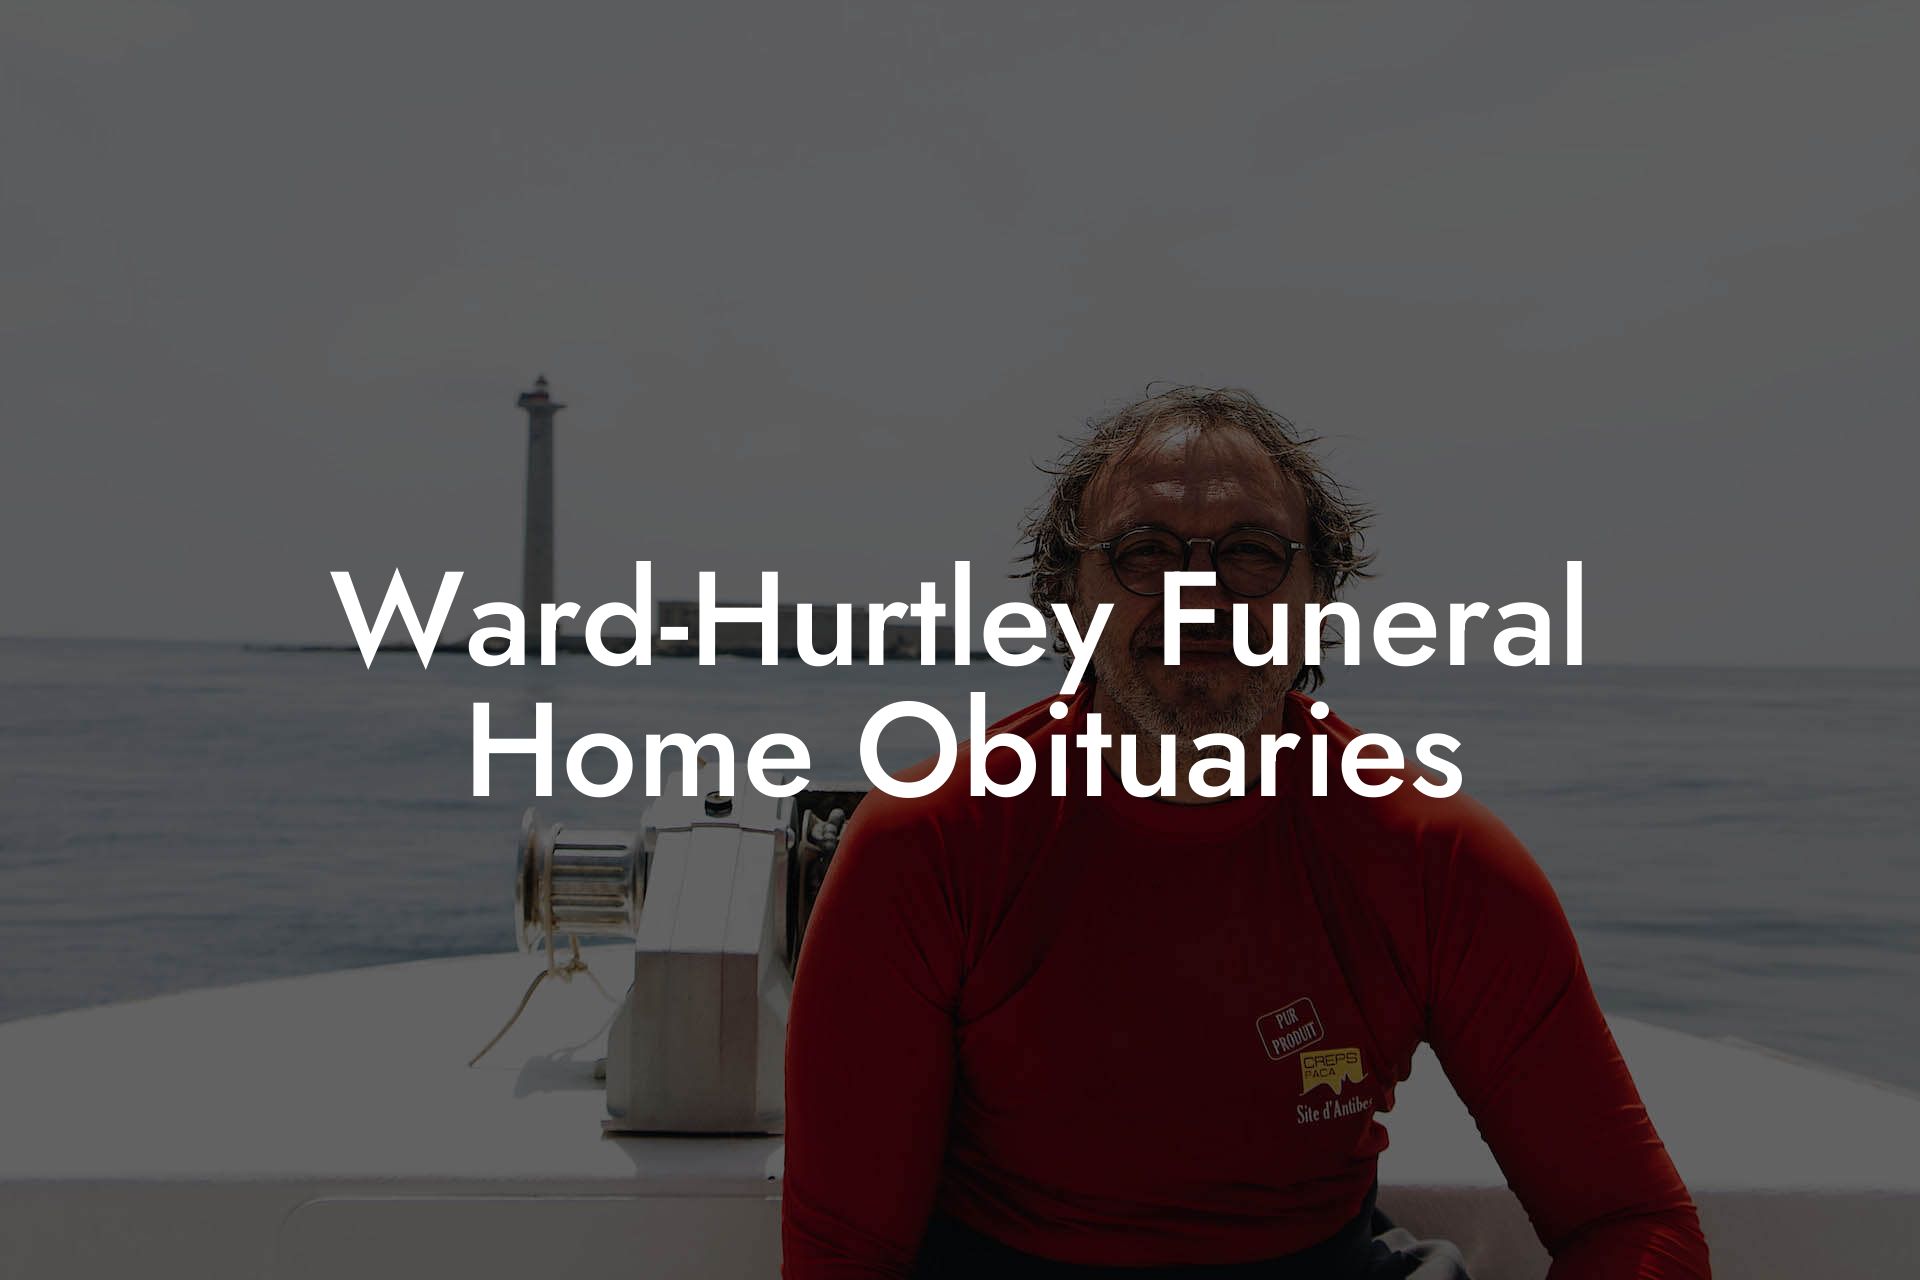 Ward-Hurtley Funeral Home Obituaries